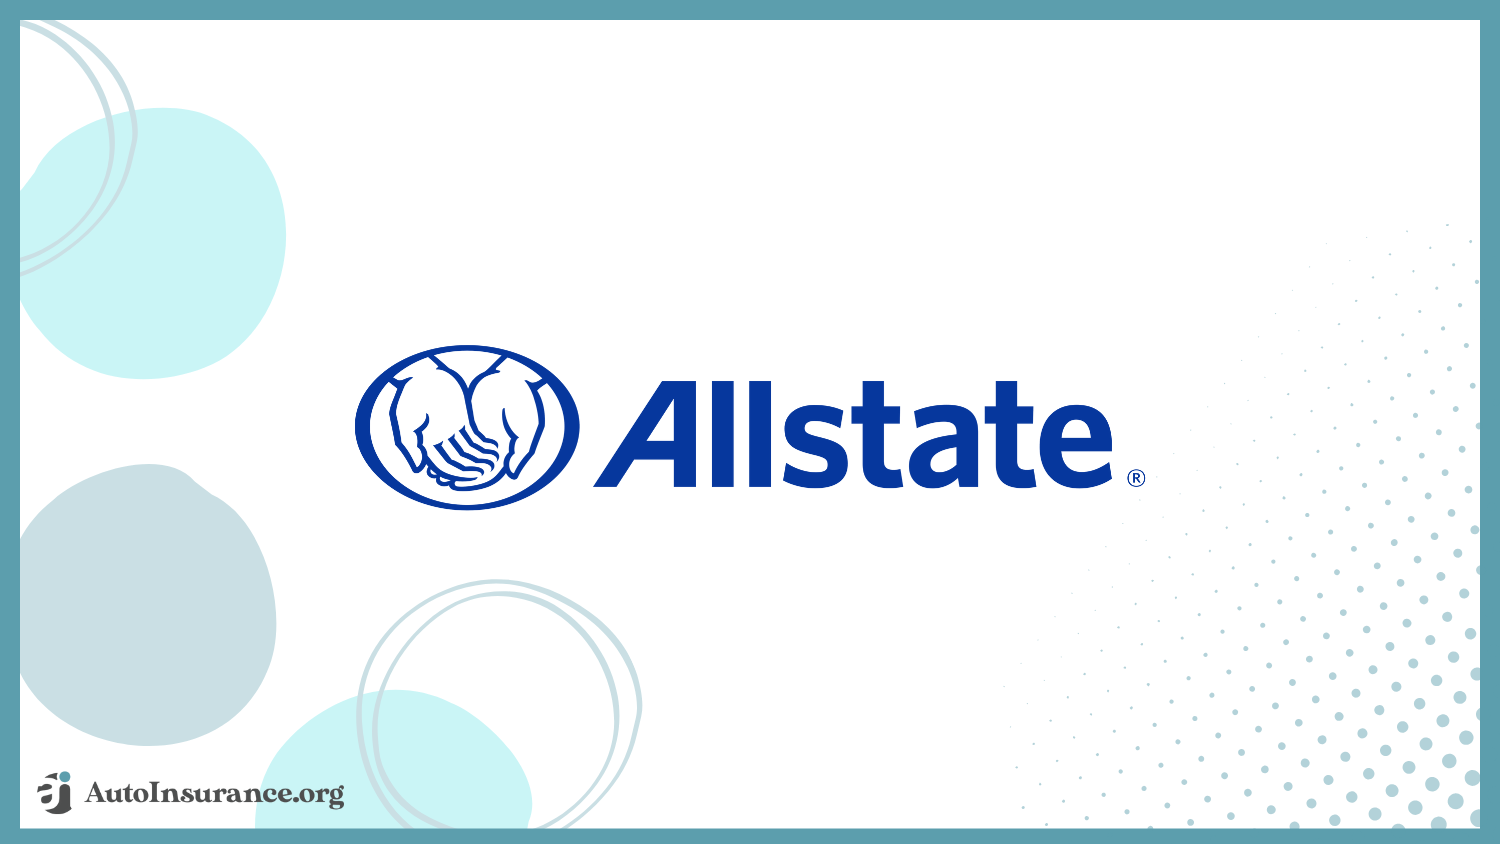 Best 3-Month Auto Insurance: Allstate